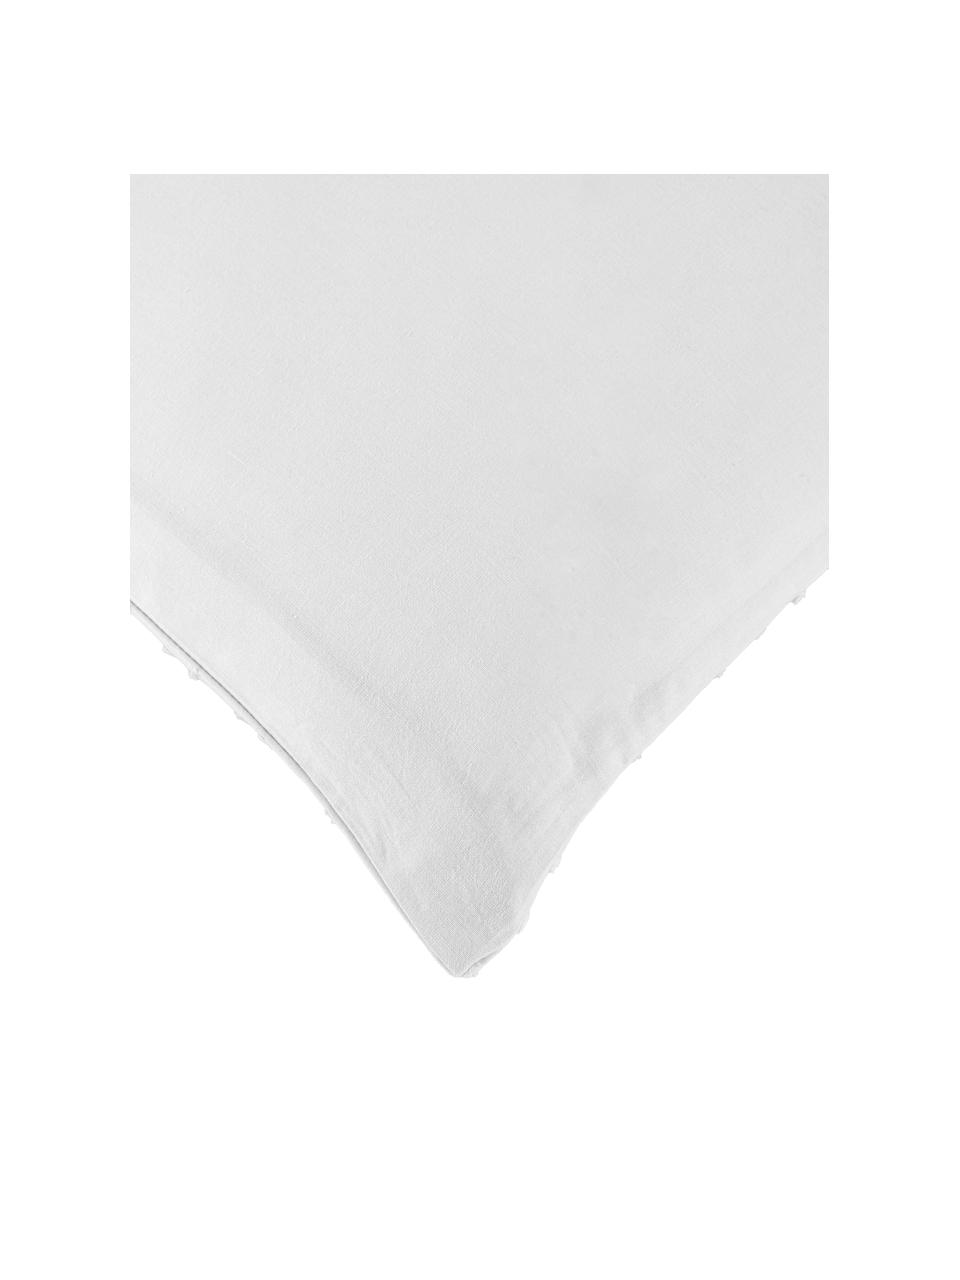 Copripiumino in tessuto Plumetti bianco Aloide, Bianco, Larg. 200 x Lung. 200 cm